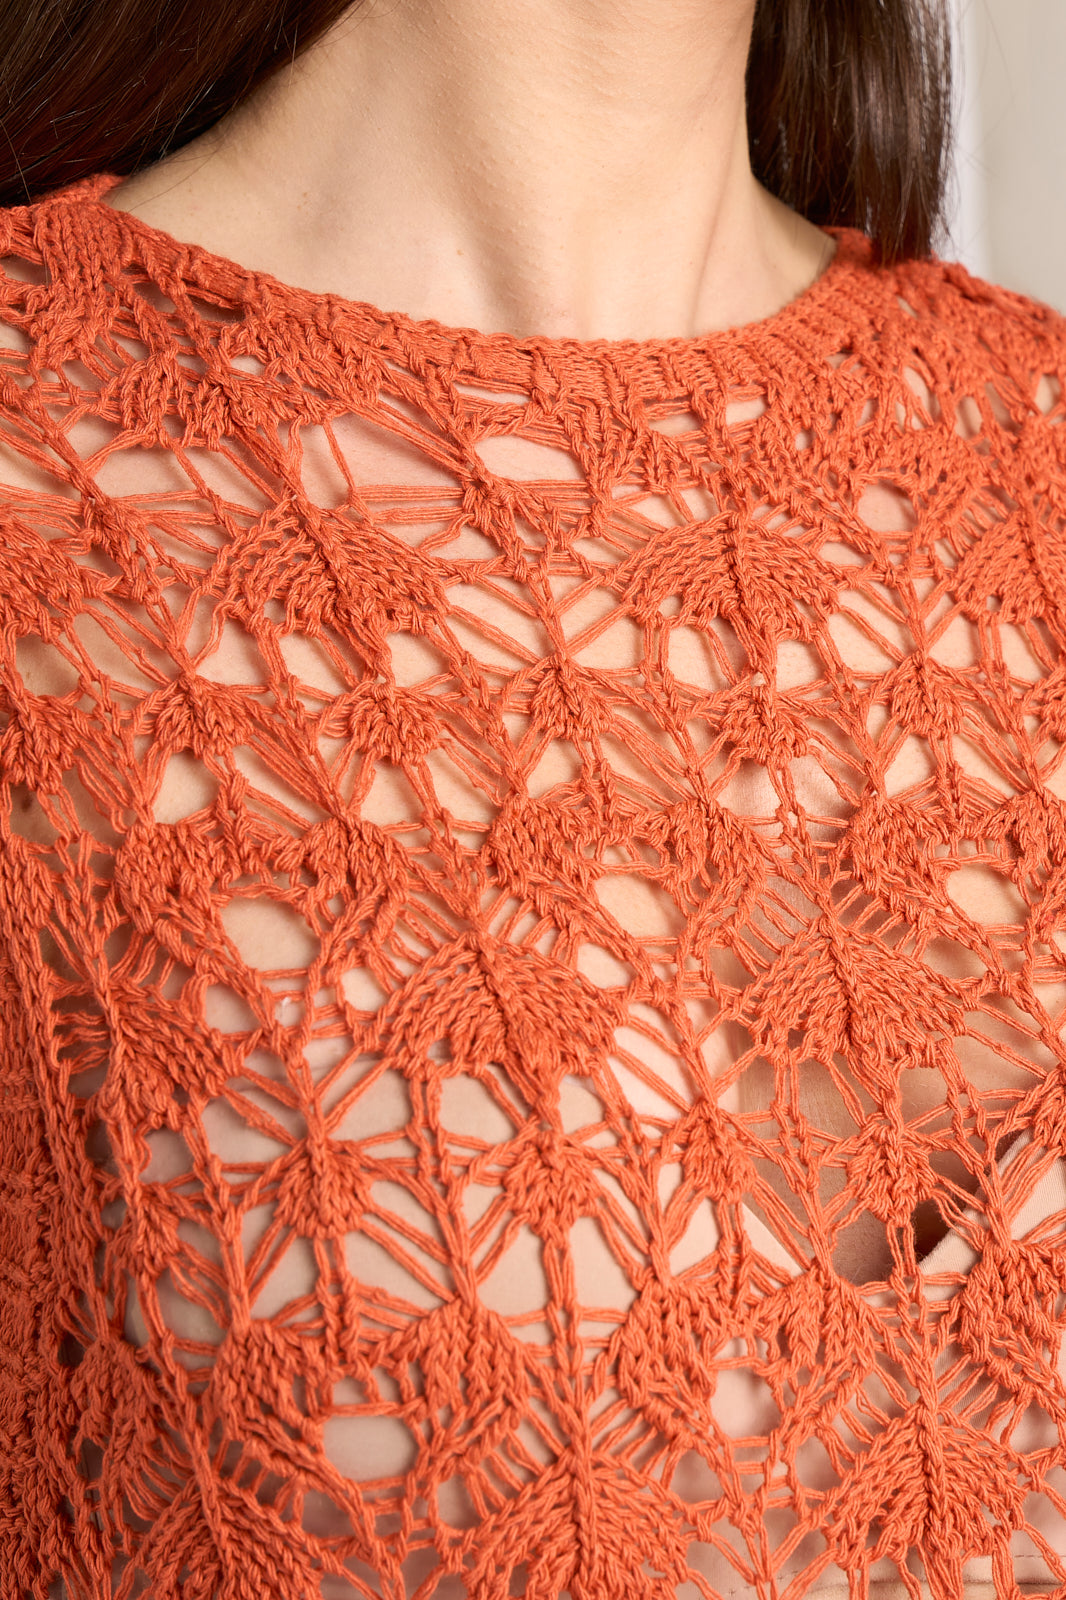 Crochet Style midi  dress - Eleonora